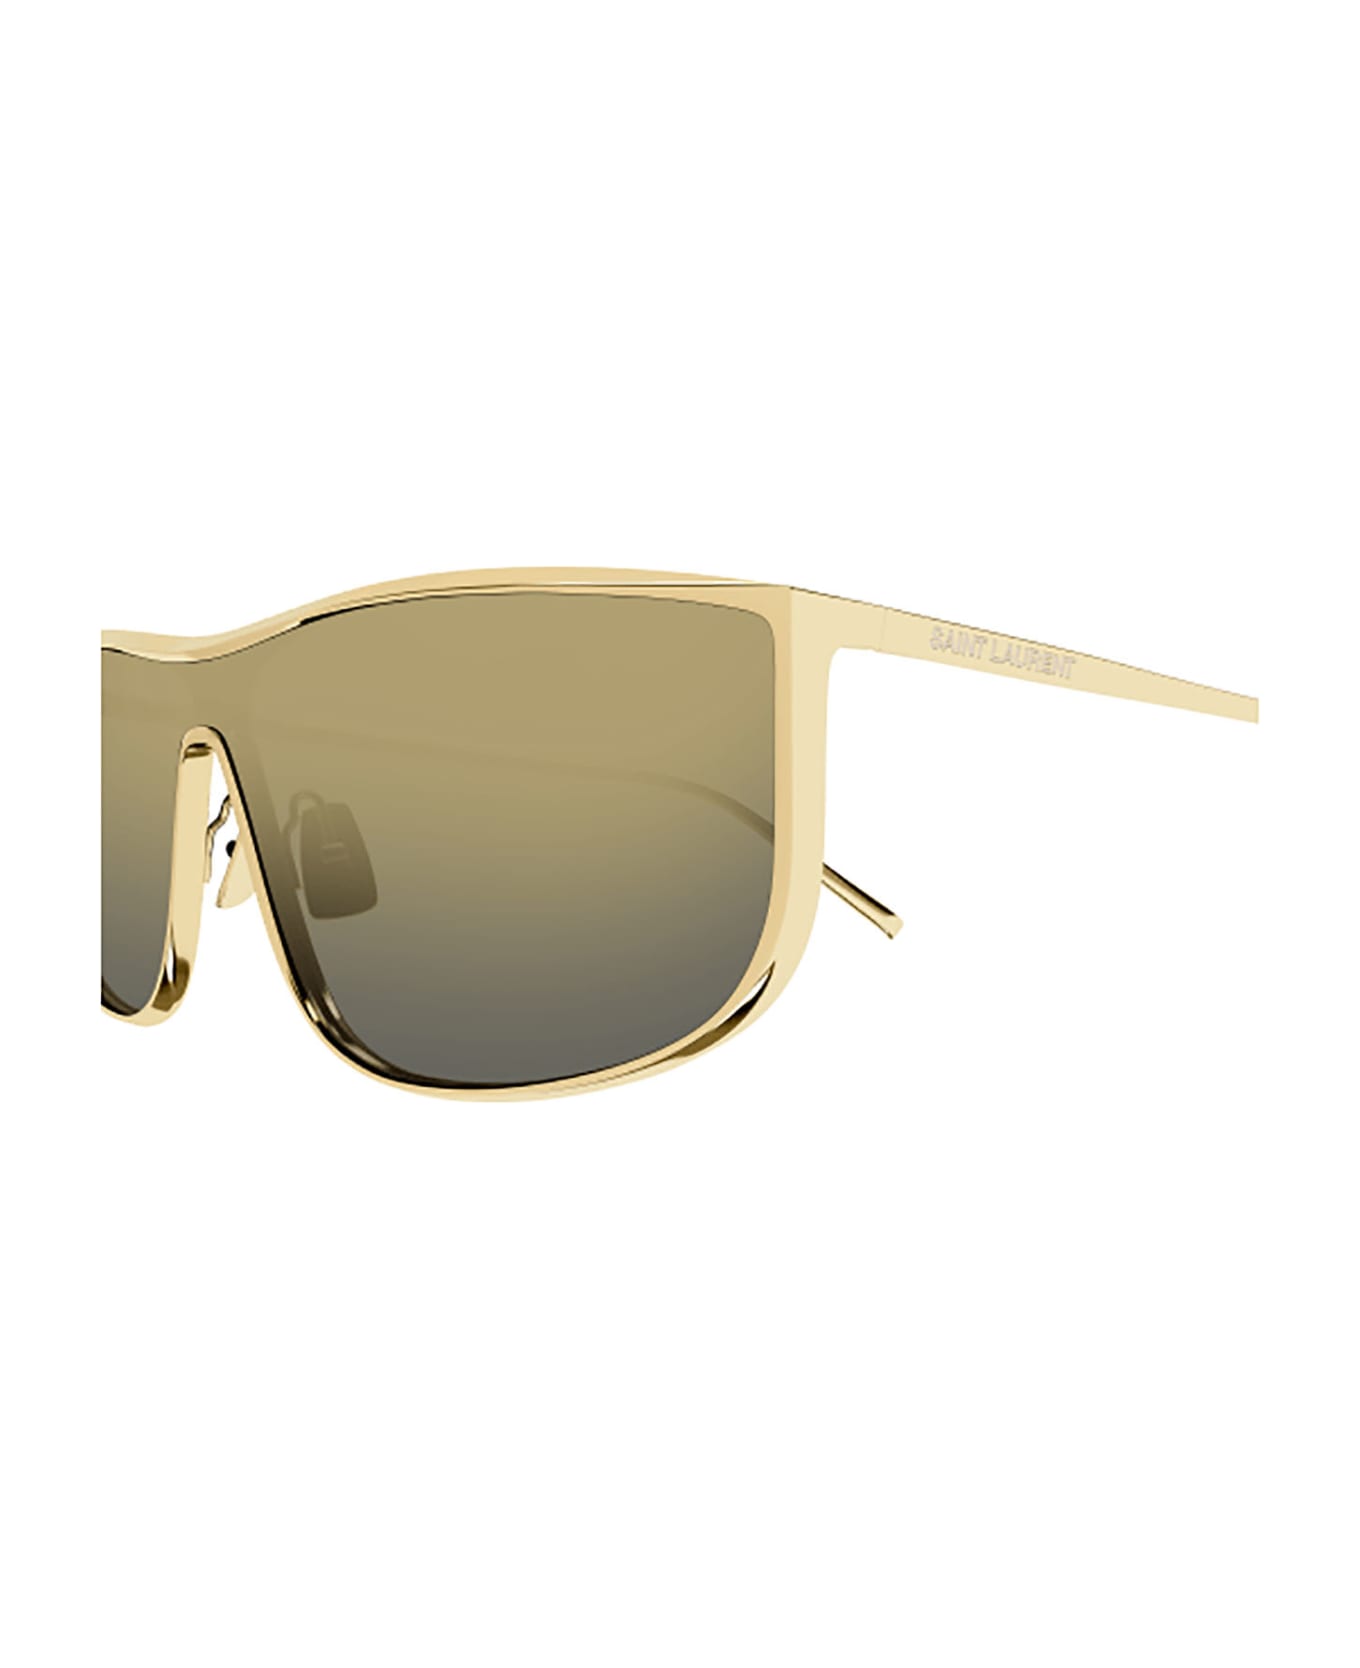 Saint Laurent Eyewear SL 605 LUNA Sunglasses - Gold Gold Bronze